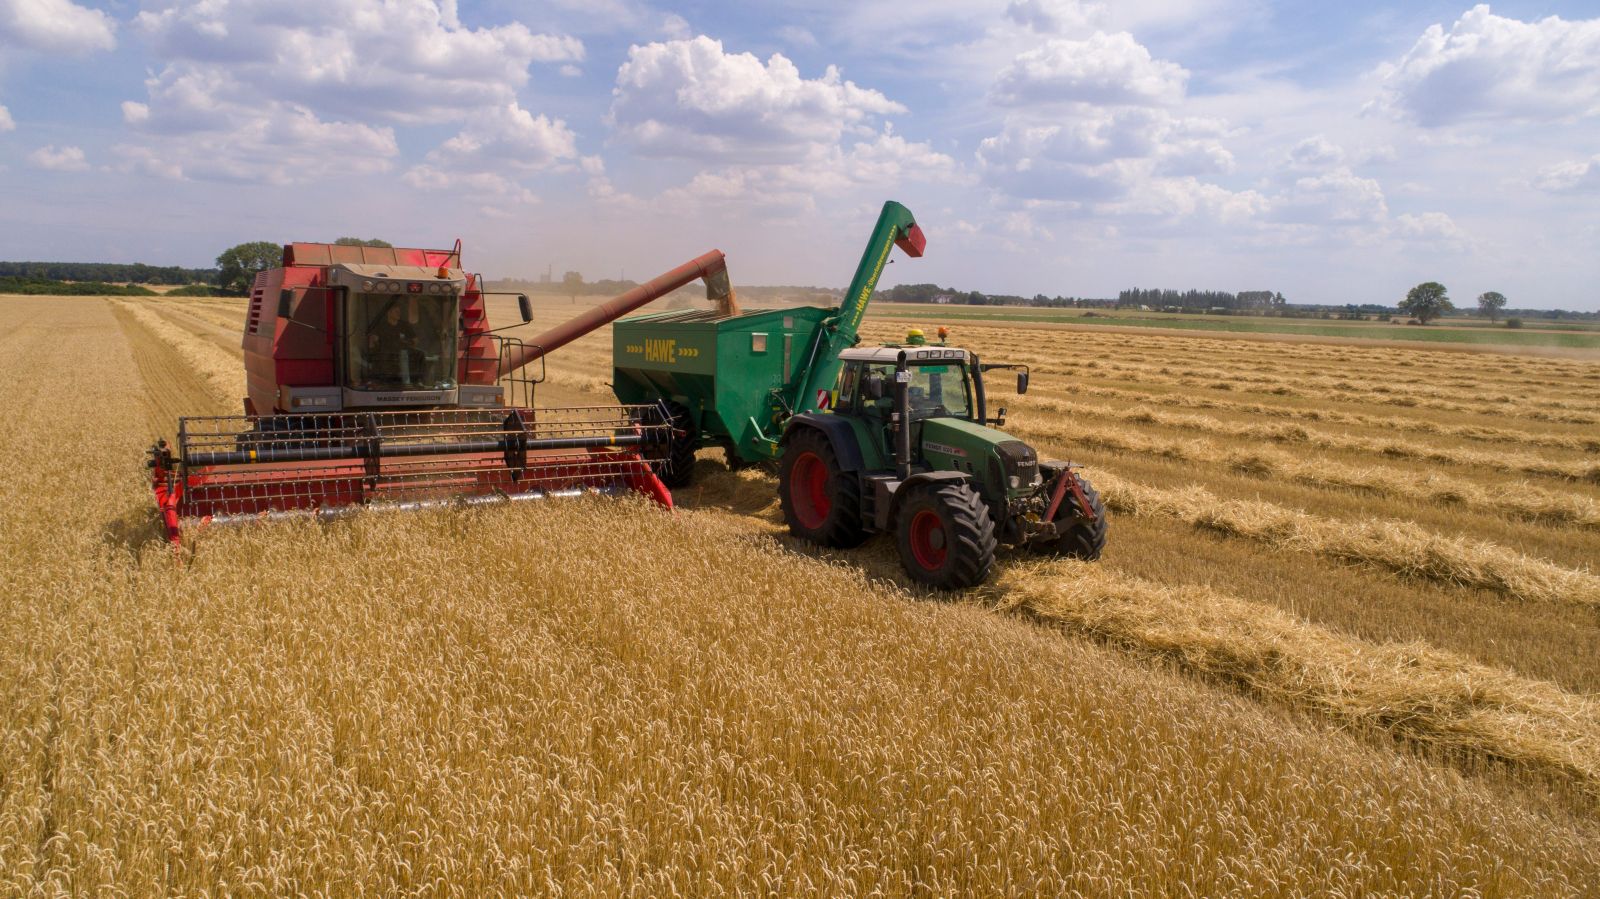 Wheat Harvest by Heiko Janowski via Unsplash